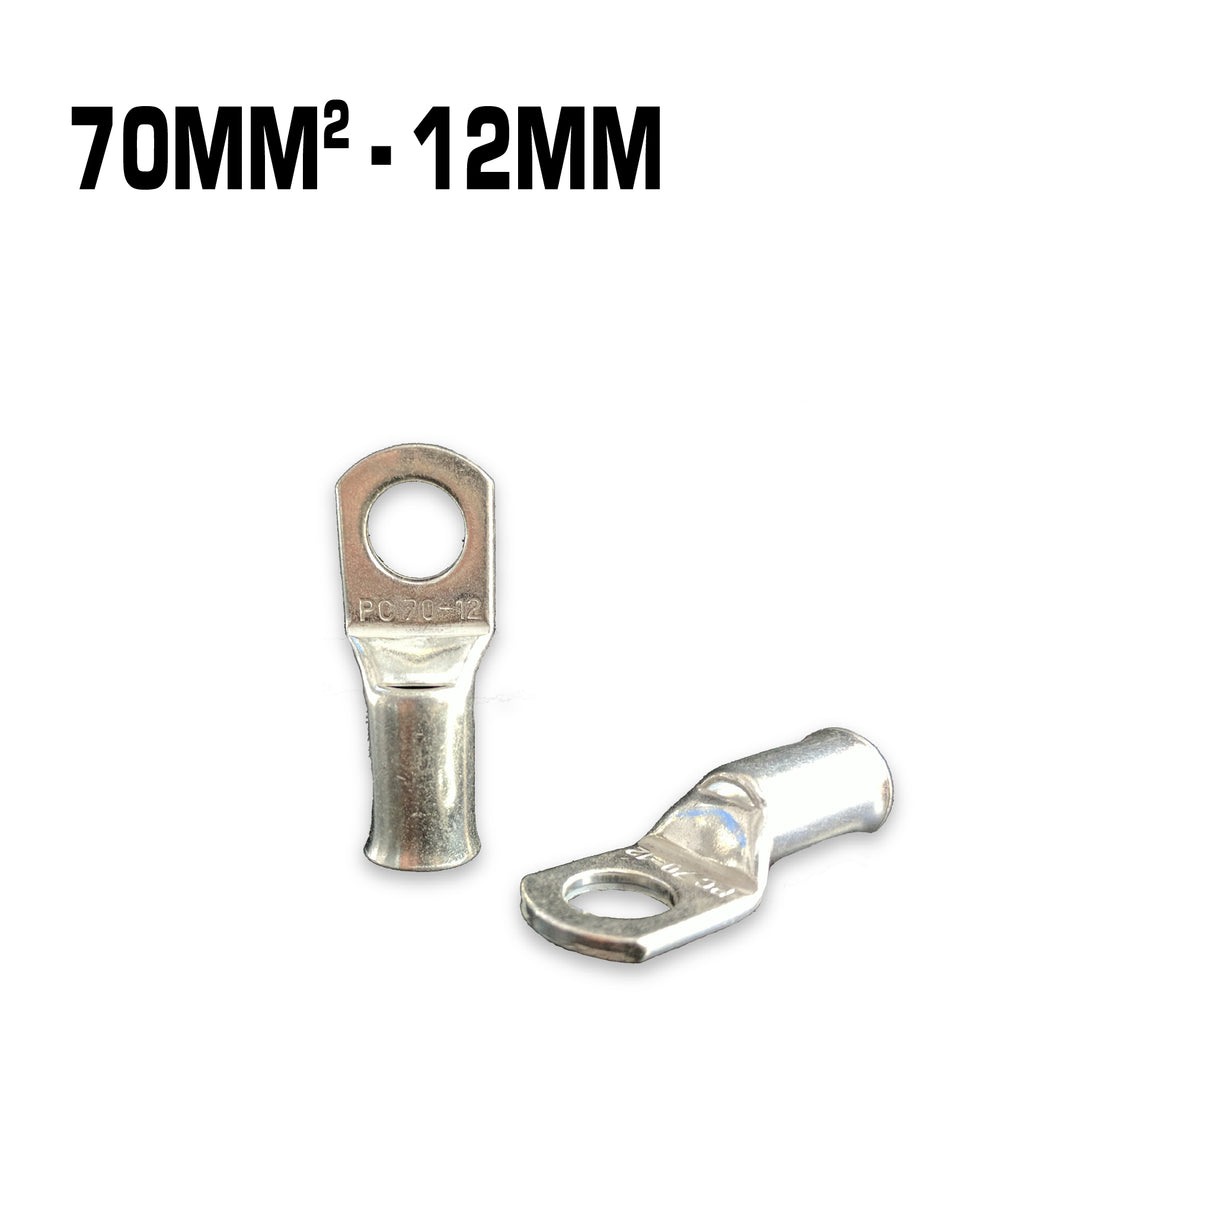 Copper Cable Lug - 70mm² Lug 12mm Hole